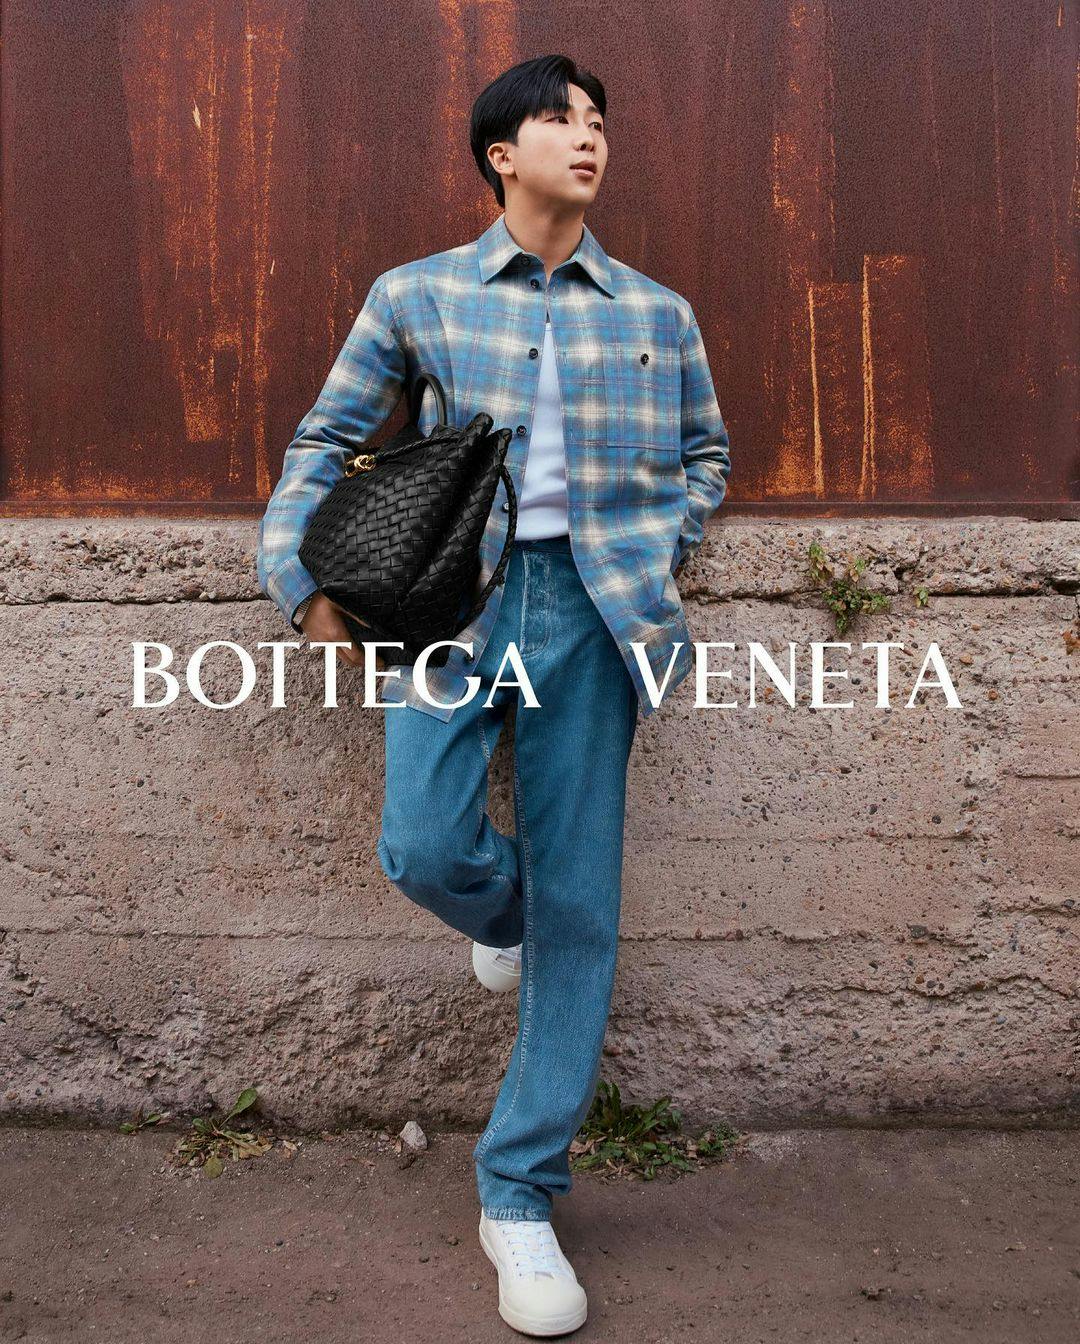 Creative director of 'Bottega Veneta' welcomes BTS's RM as a brand  ambassador